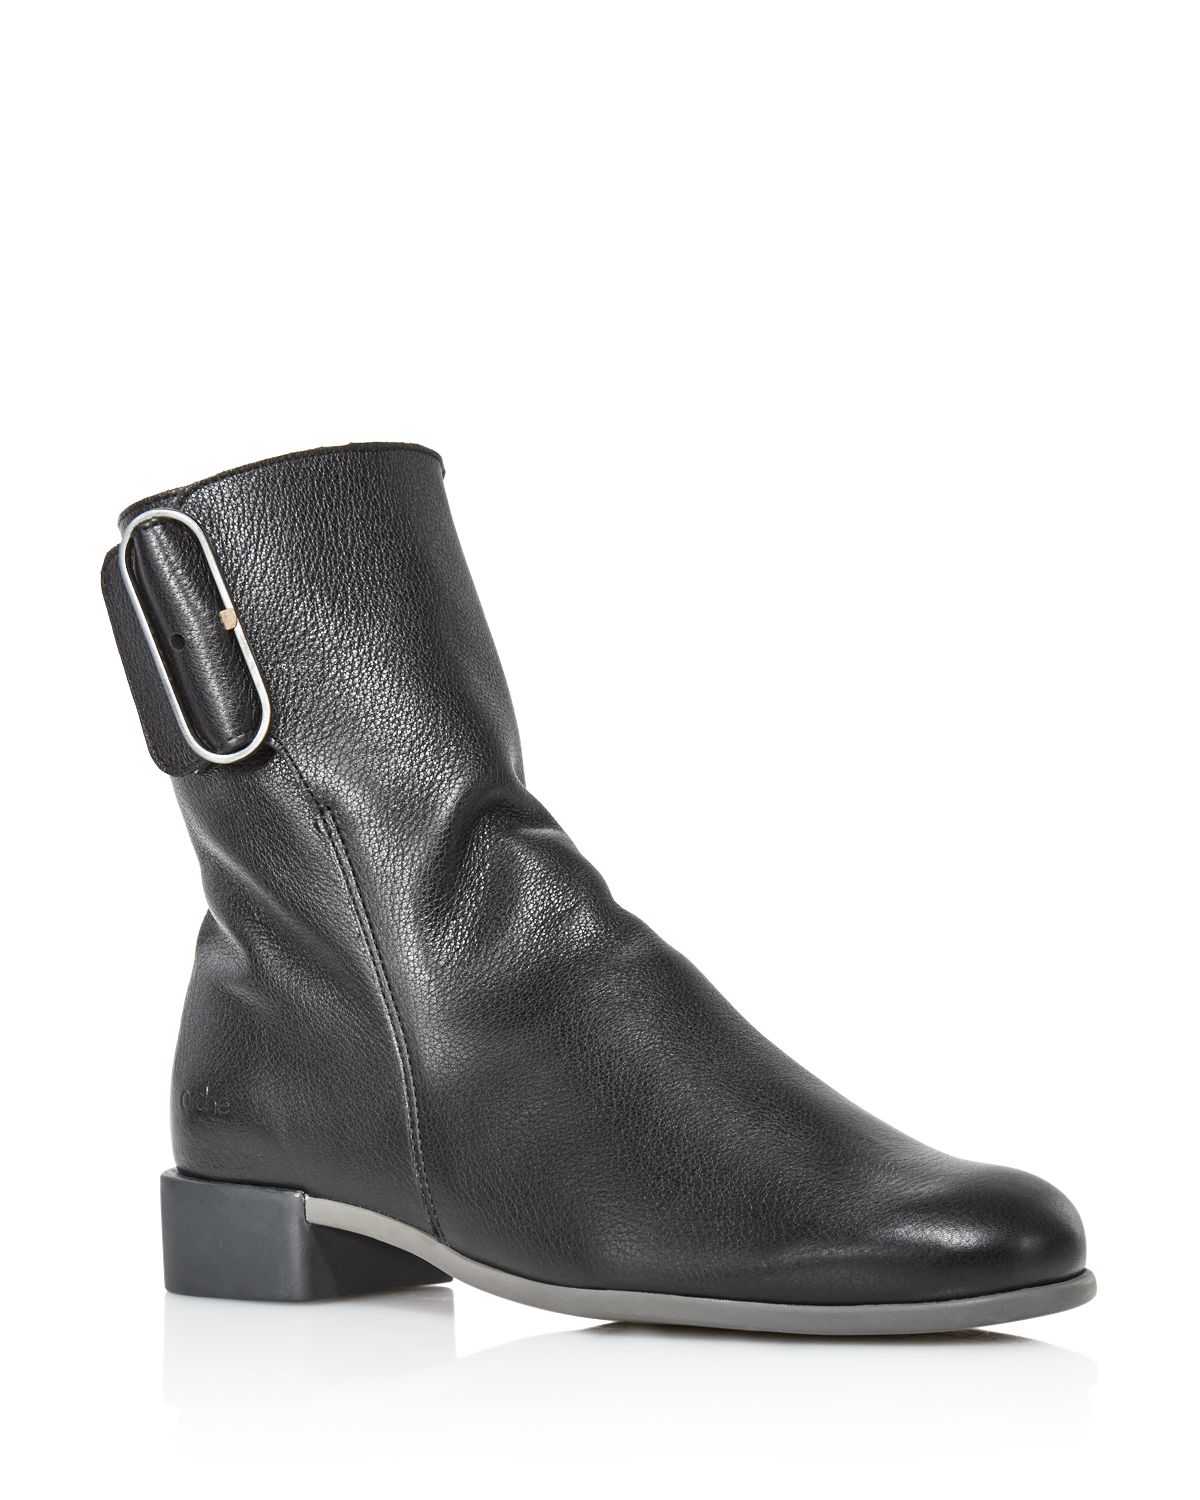 Arche Twibel Boots, $520